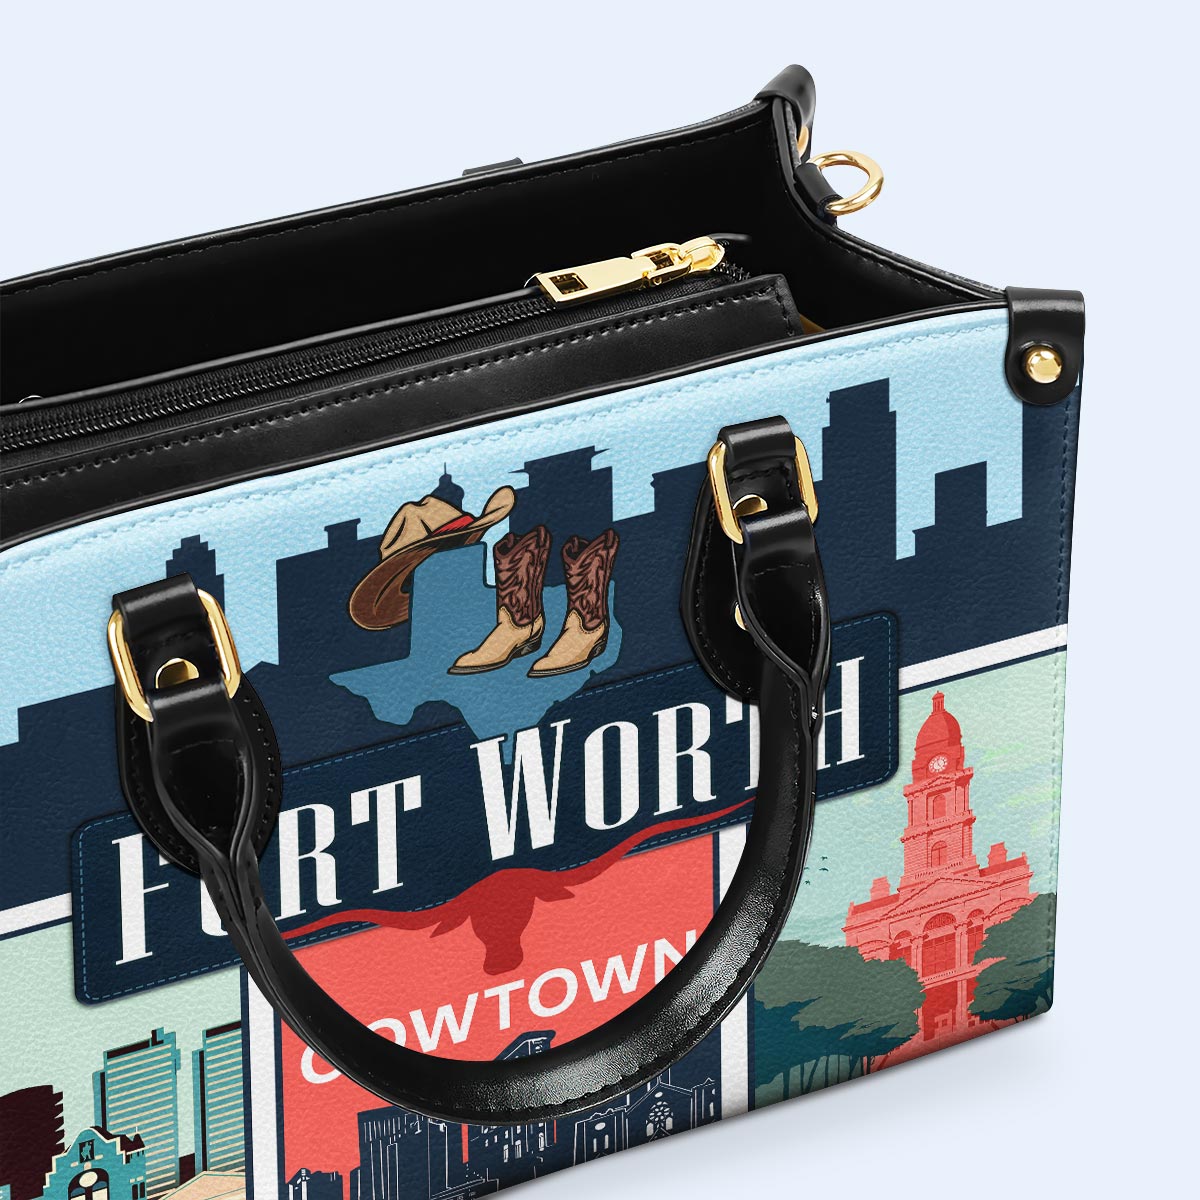 Fort Worth - Leather Handbag - FW01